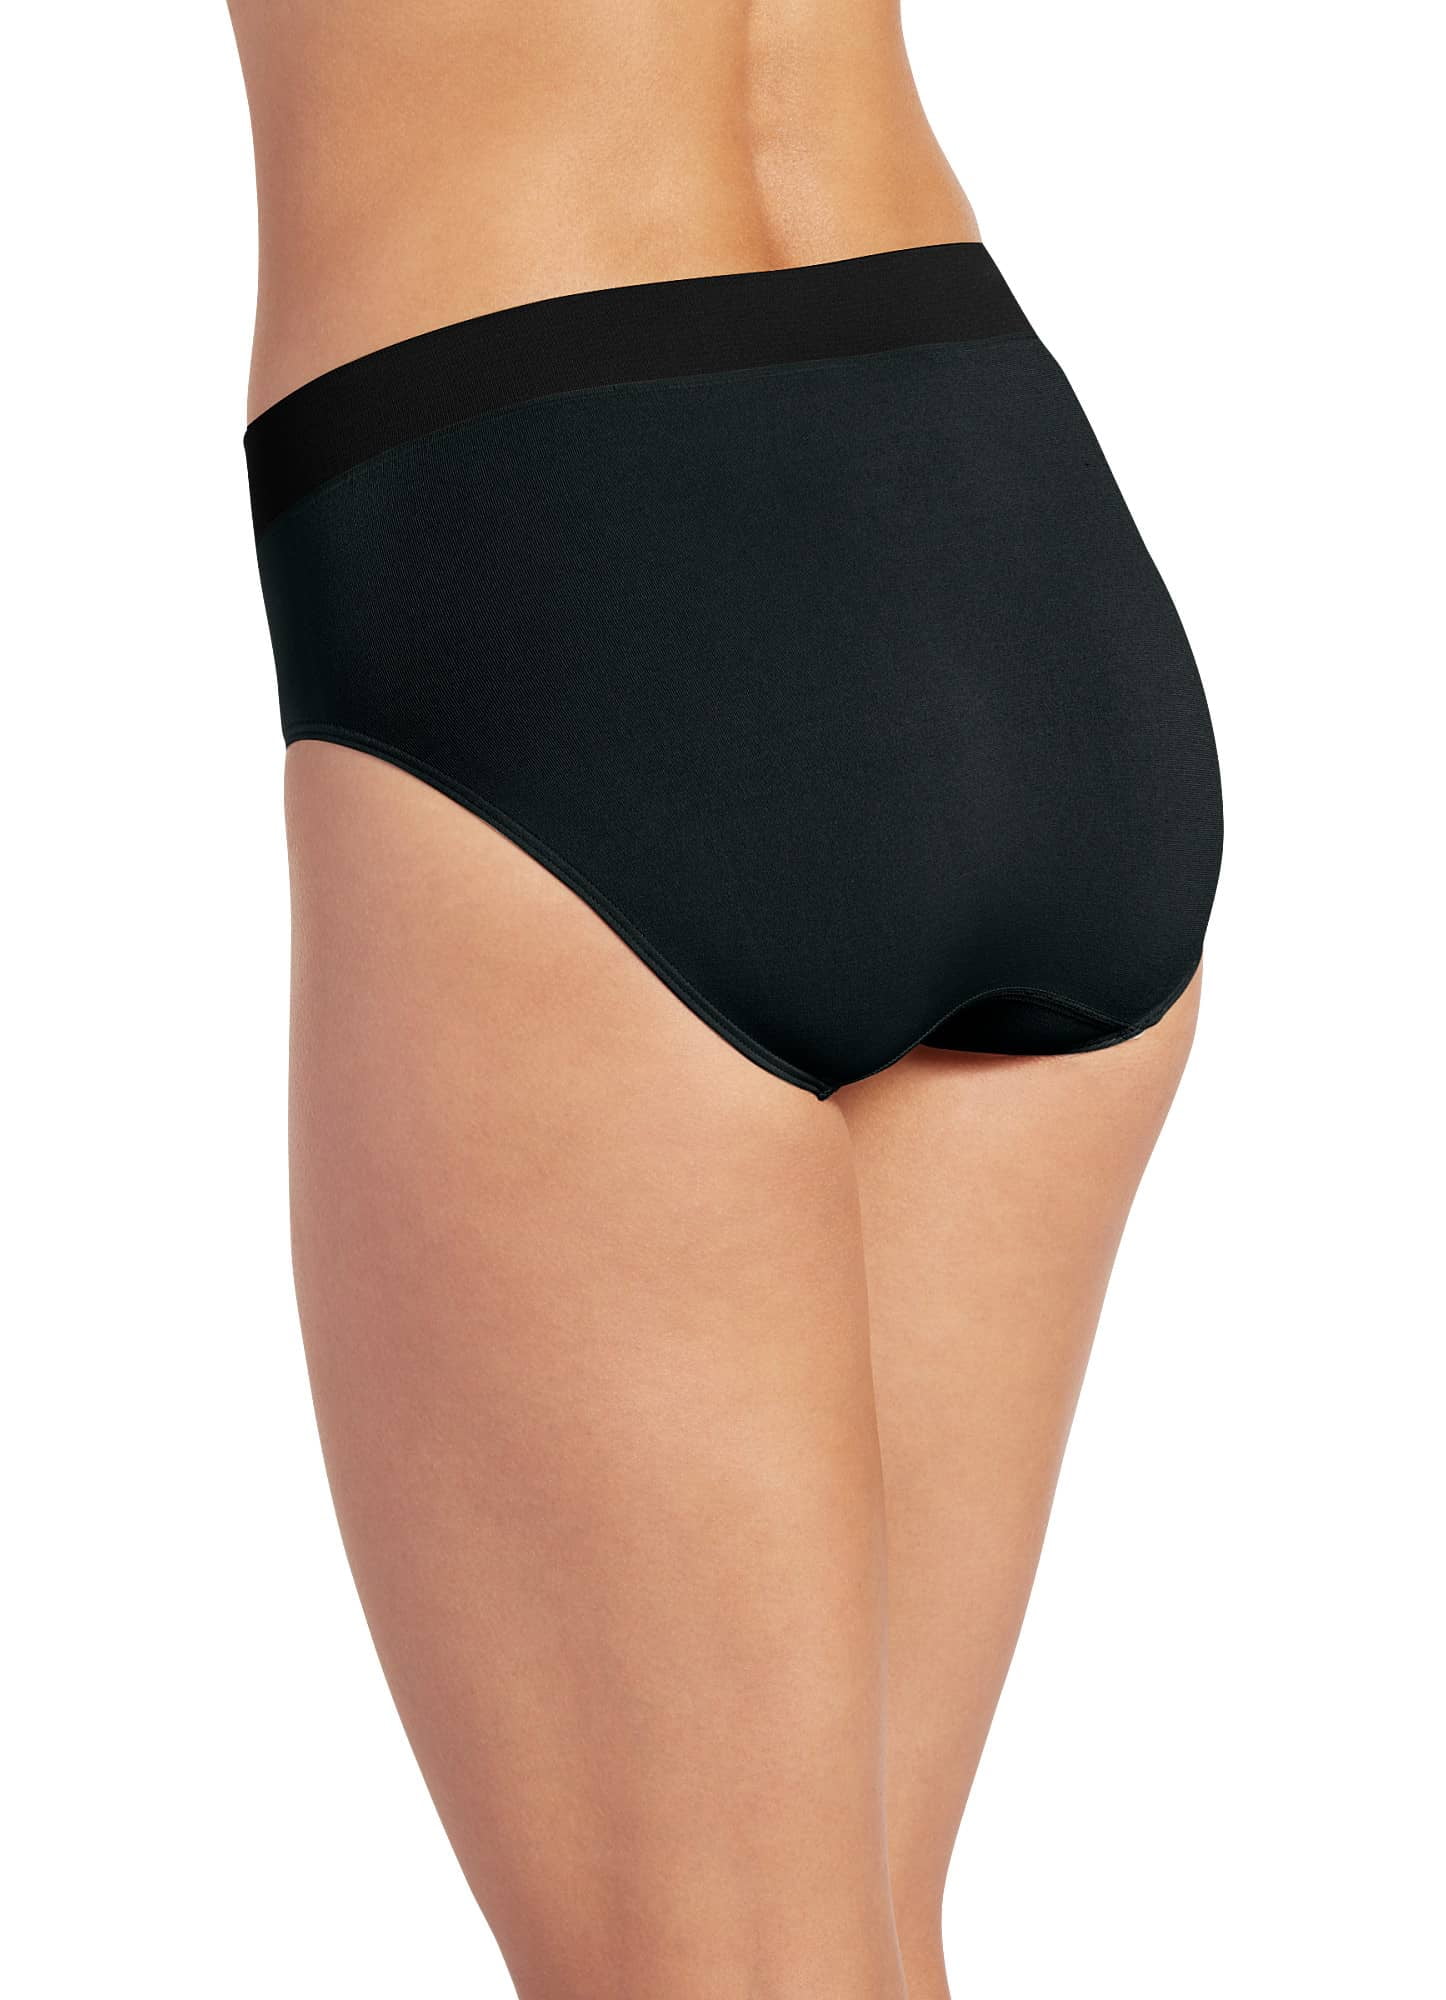 Jockey Women's Underwear EcoComfort Hi Cut, Black, 6 mujer ropa